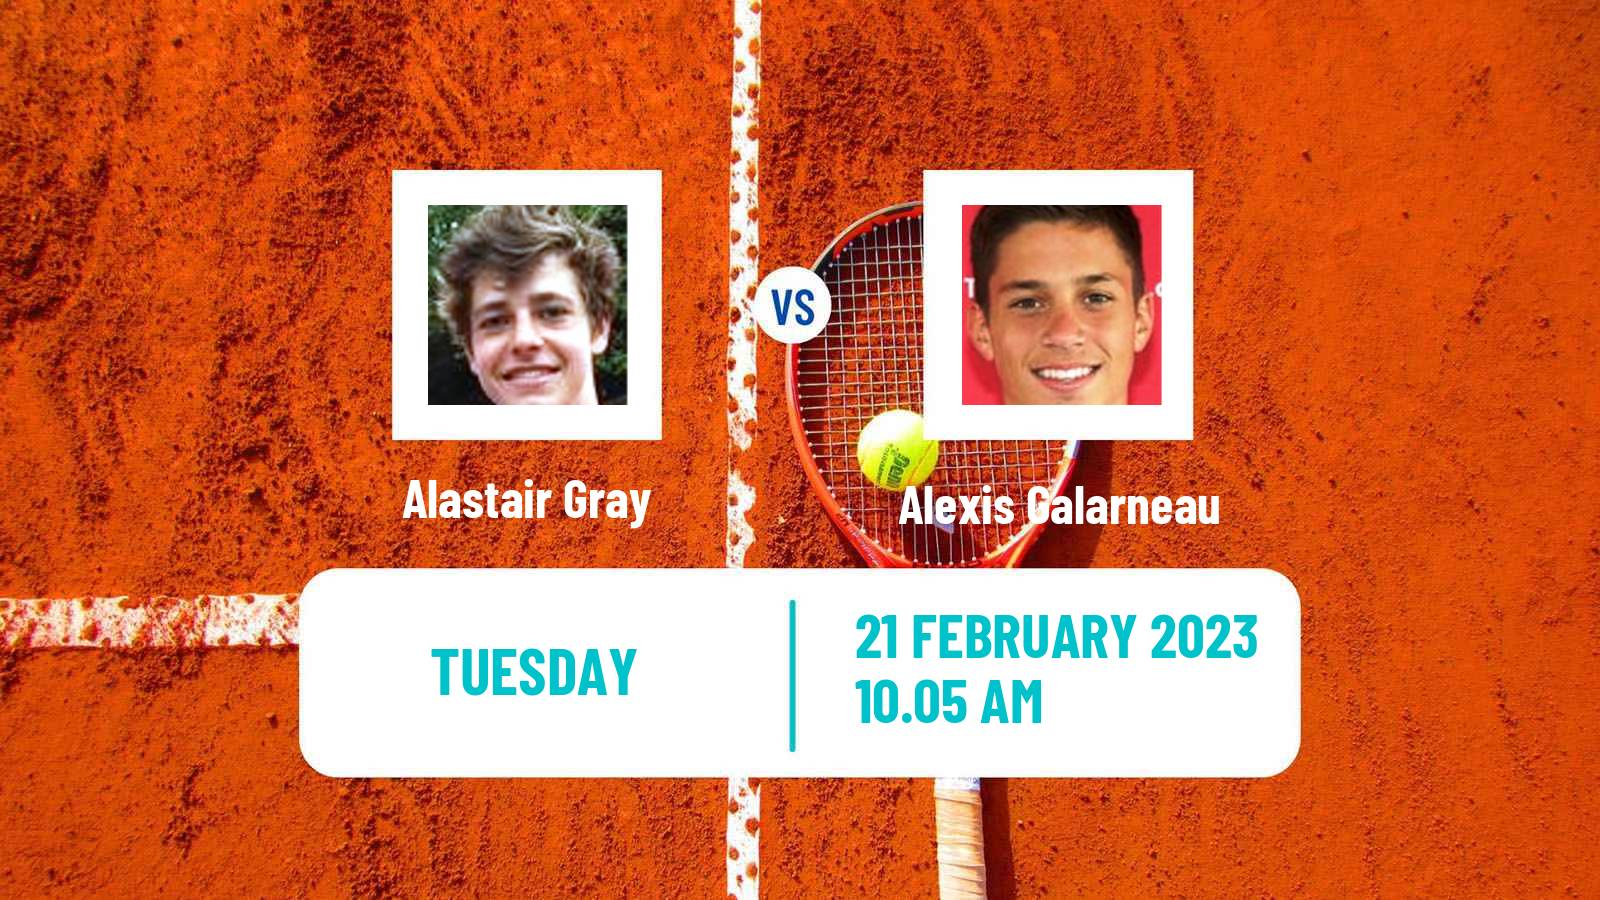 Tennis ATP Challenger Alastair Gray - Alexis Galarneau